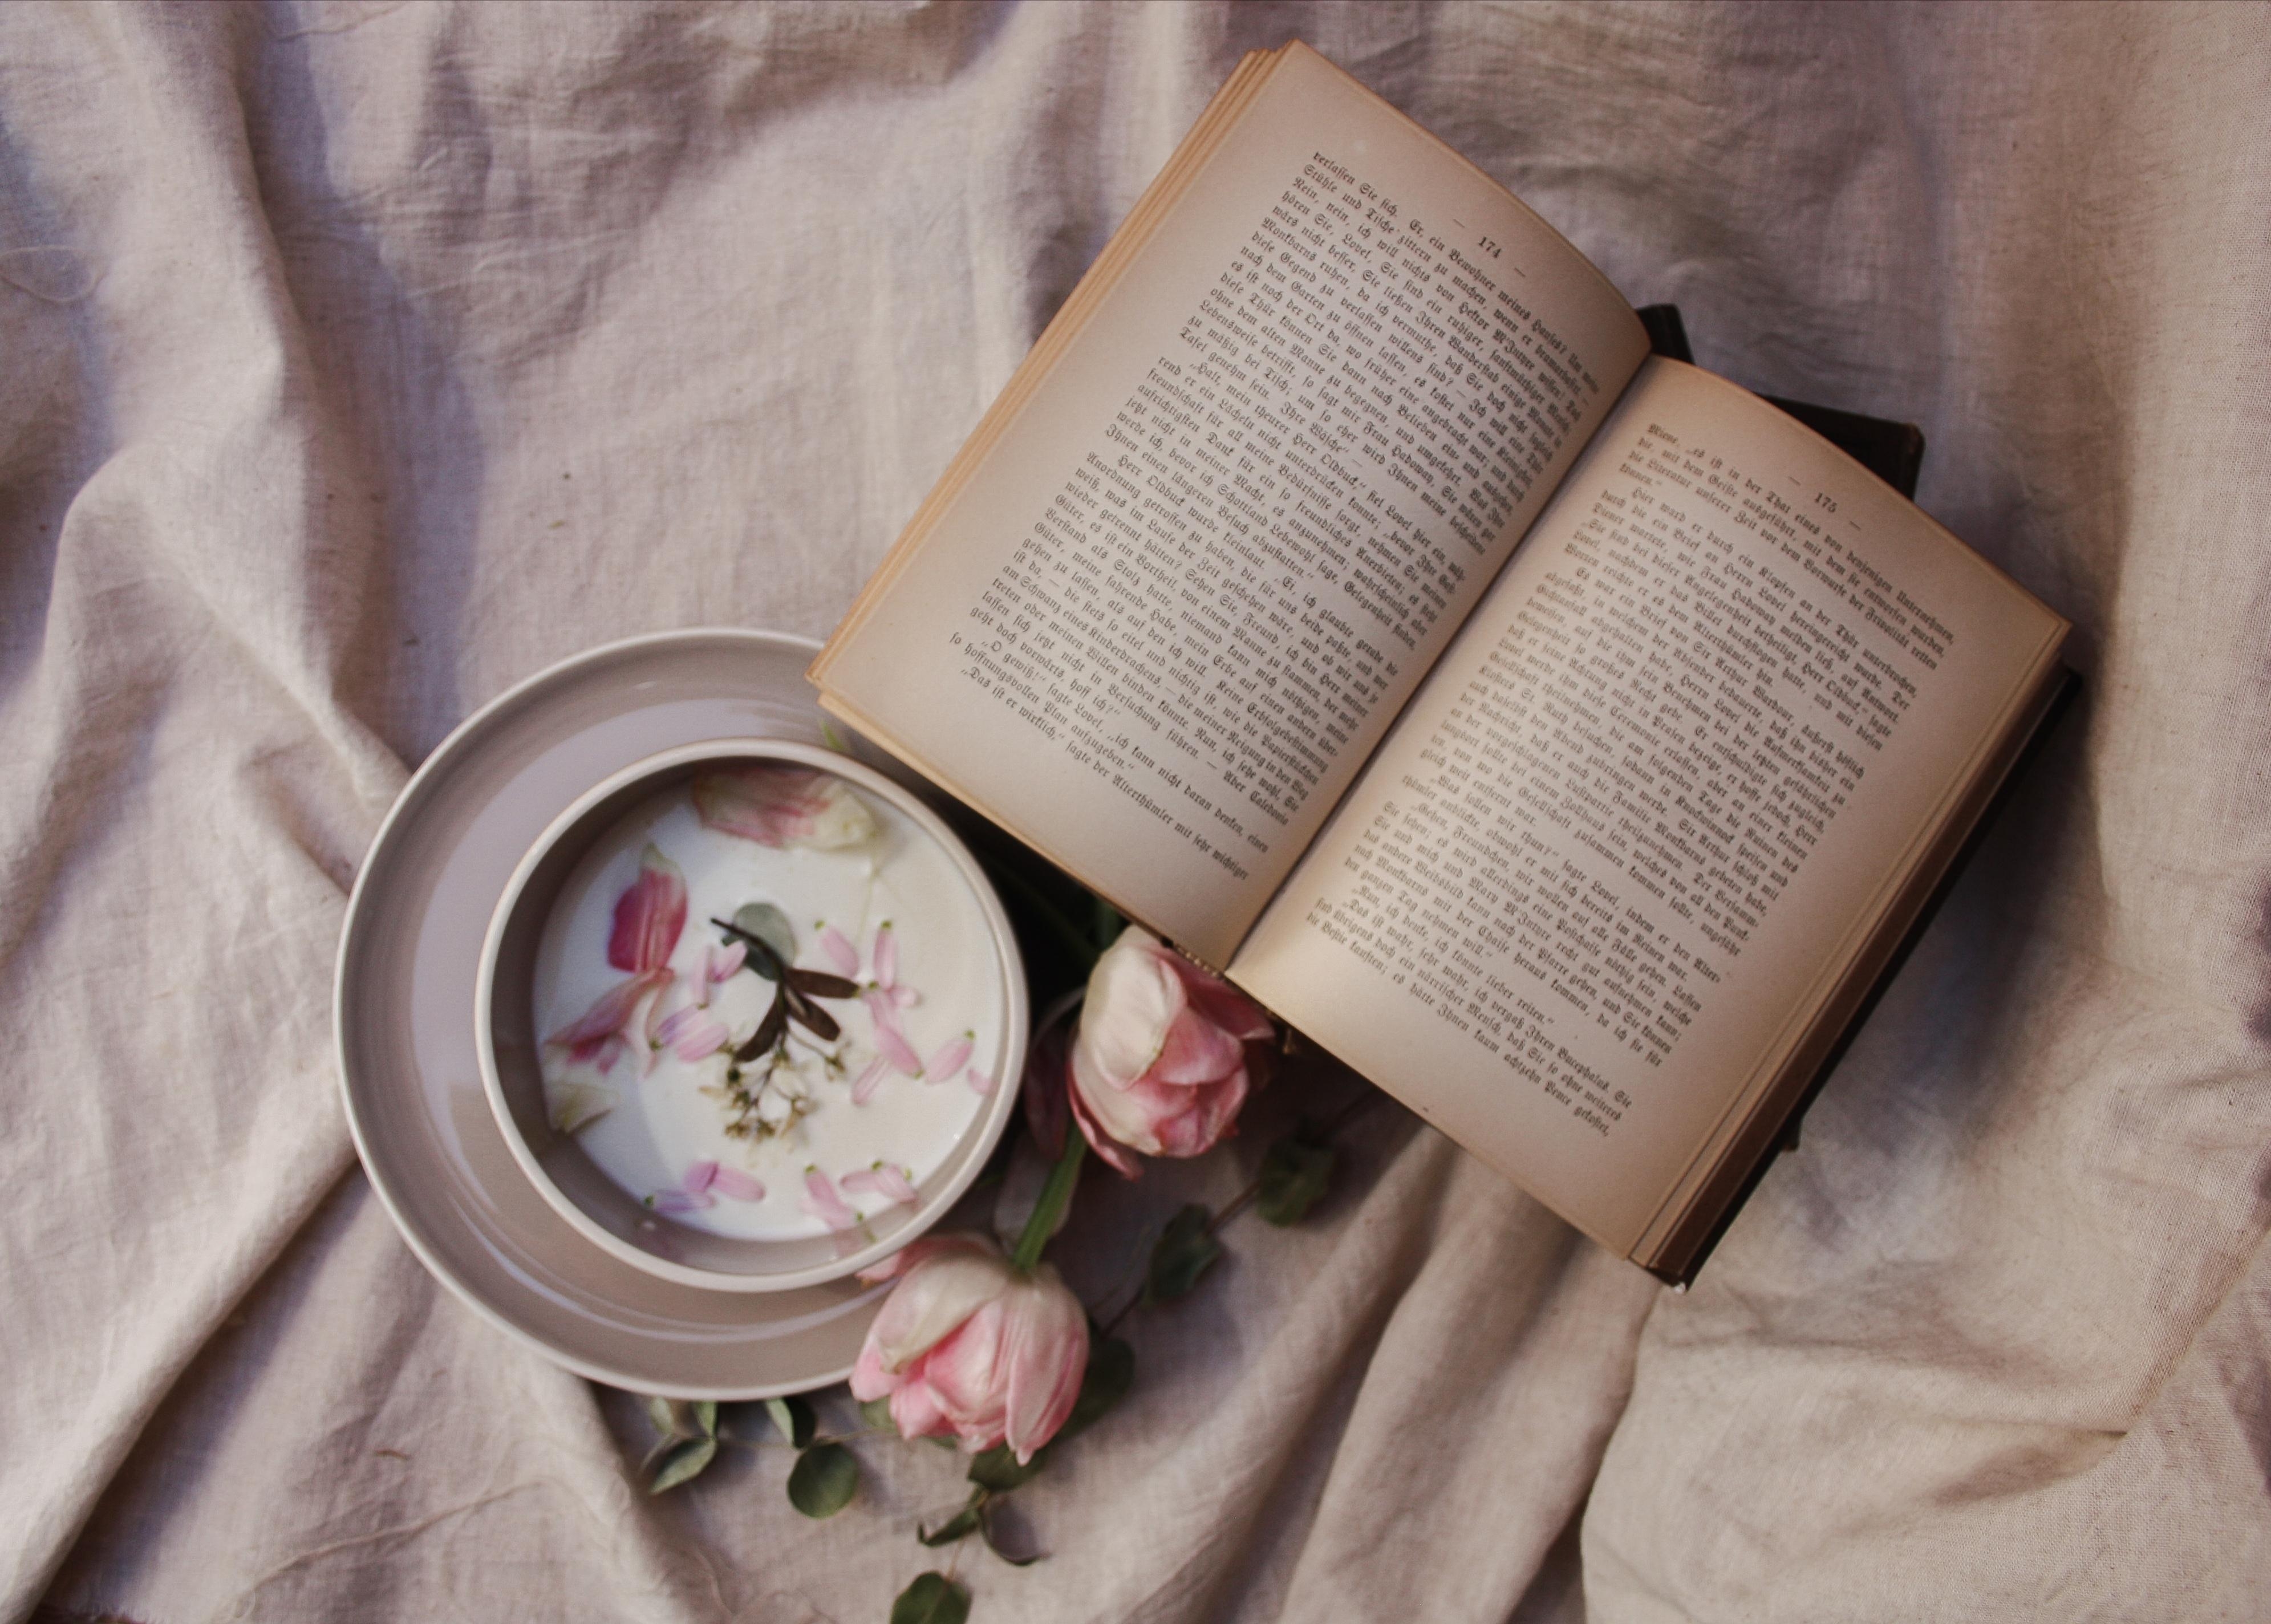 ♡ A book is like a garden carried in the pocket. ♡
#detailverliebt #blumen #coffee
